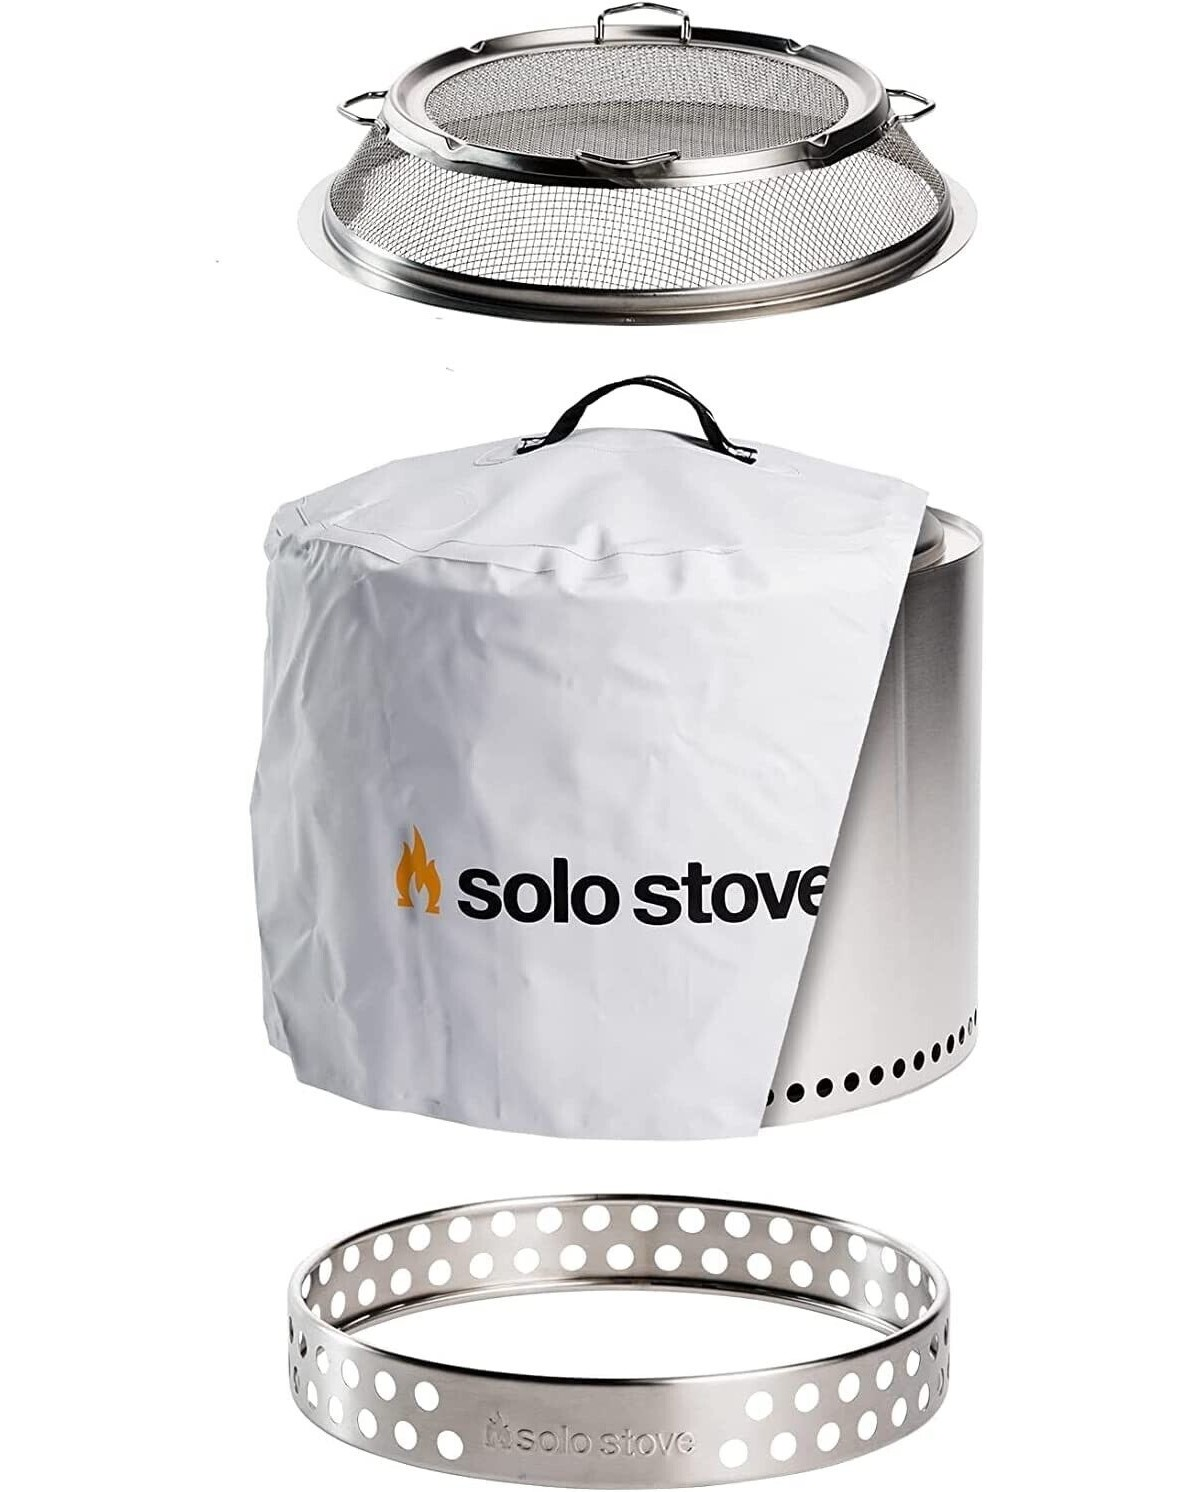 BONFIRE Feuerschale, STOVE Outdoor-Kamin Silber raucharm Edelstahl, mit Funkschutz aus SOLO